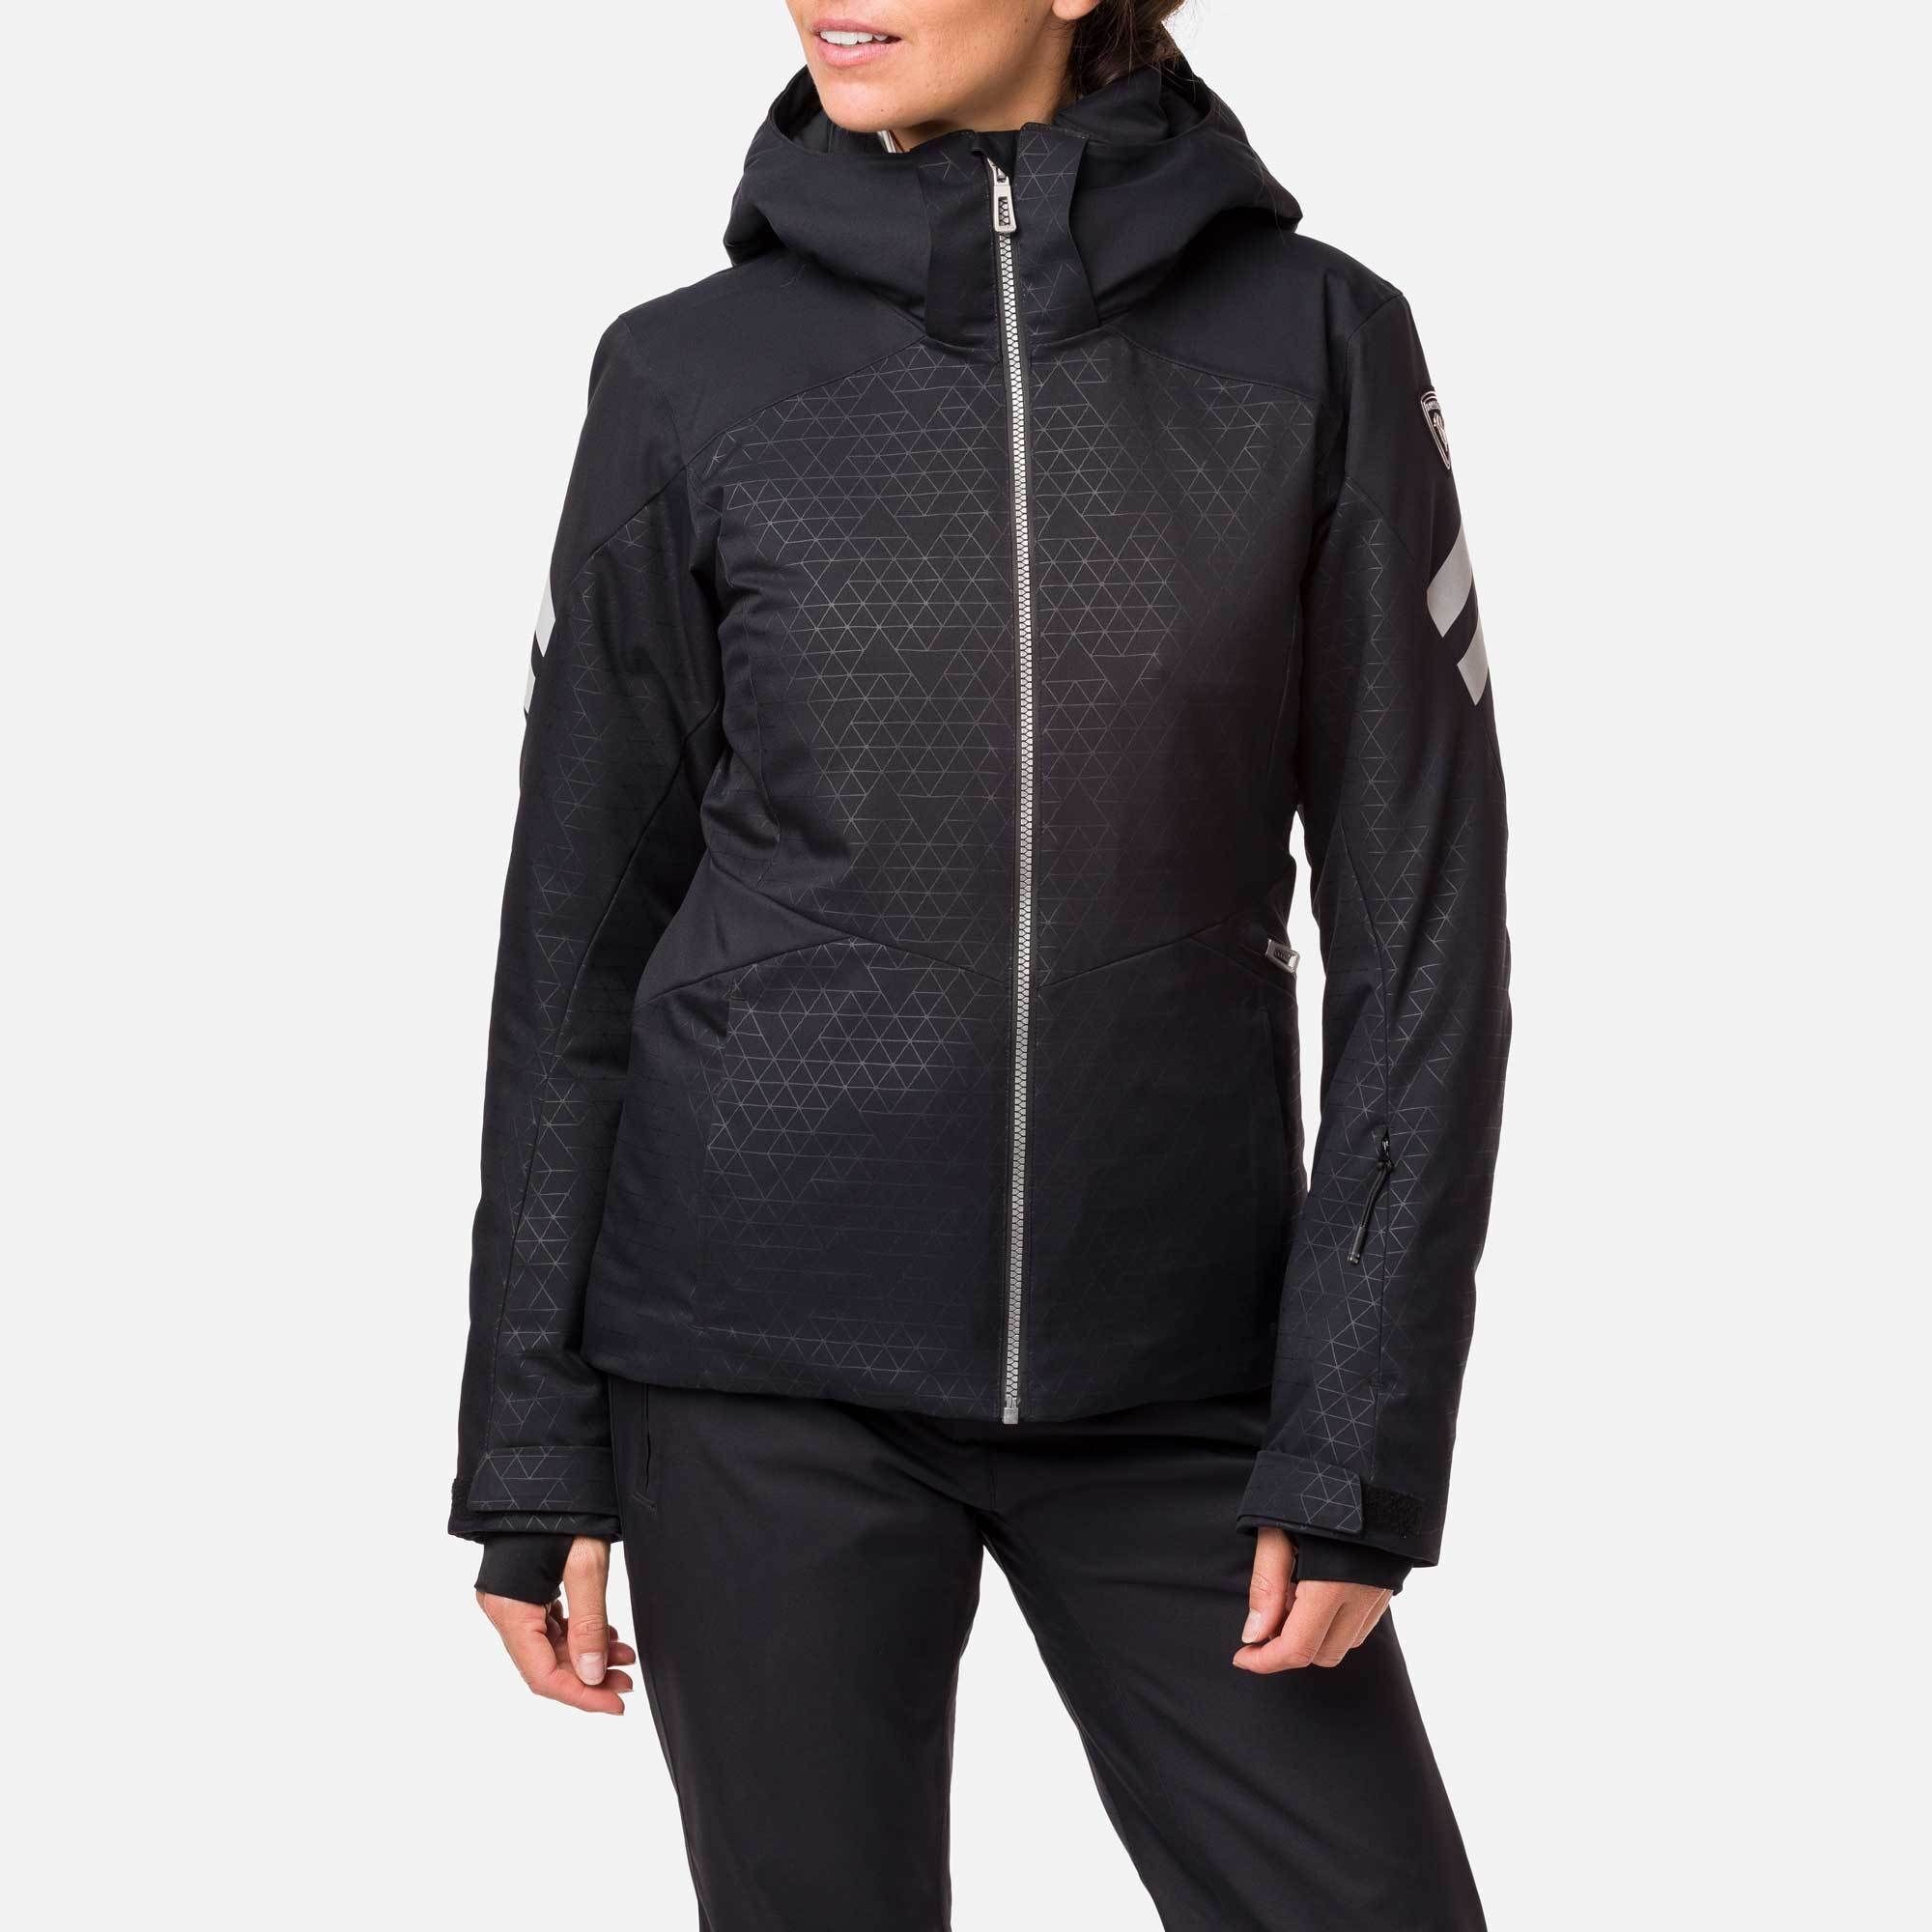 Rossignol Controle Jacket - Ski jacket - Women's